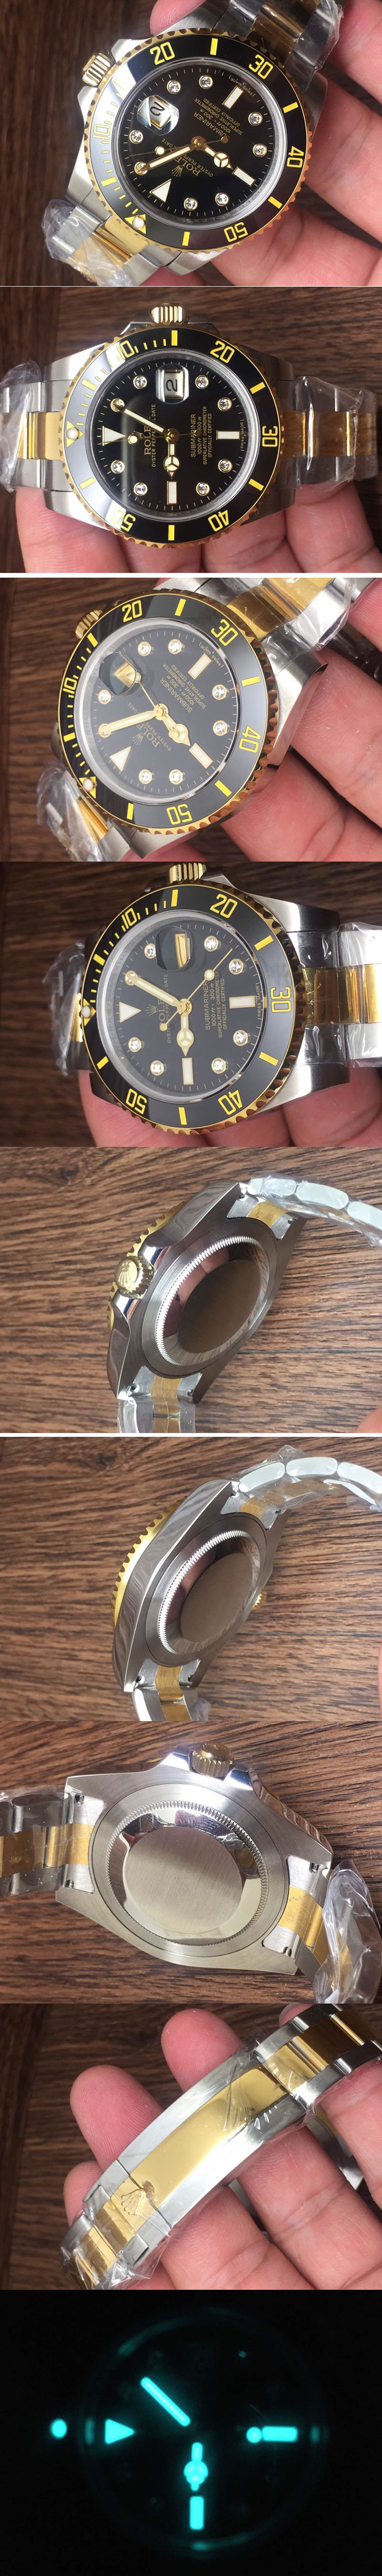 Replica Rolex Submariner Watches